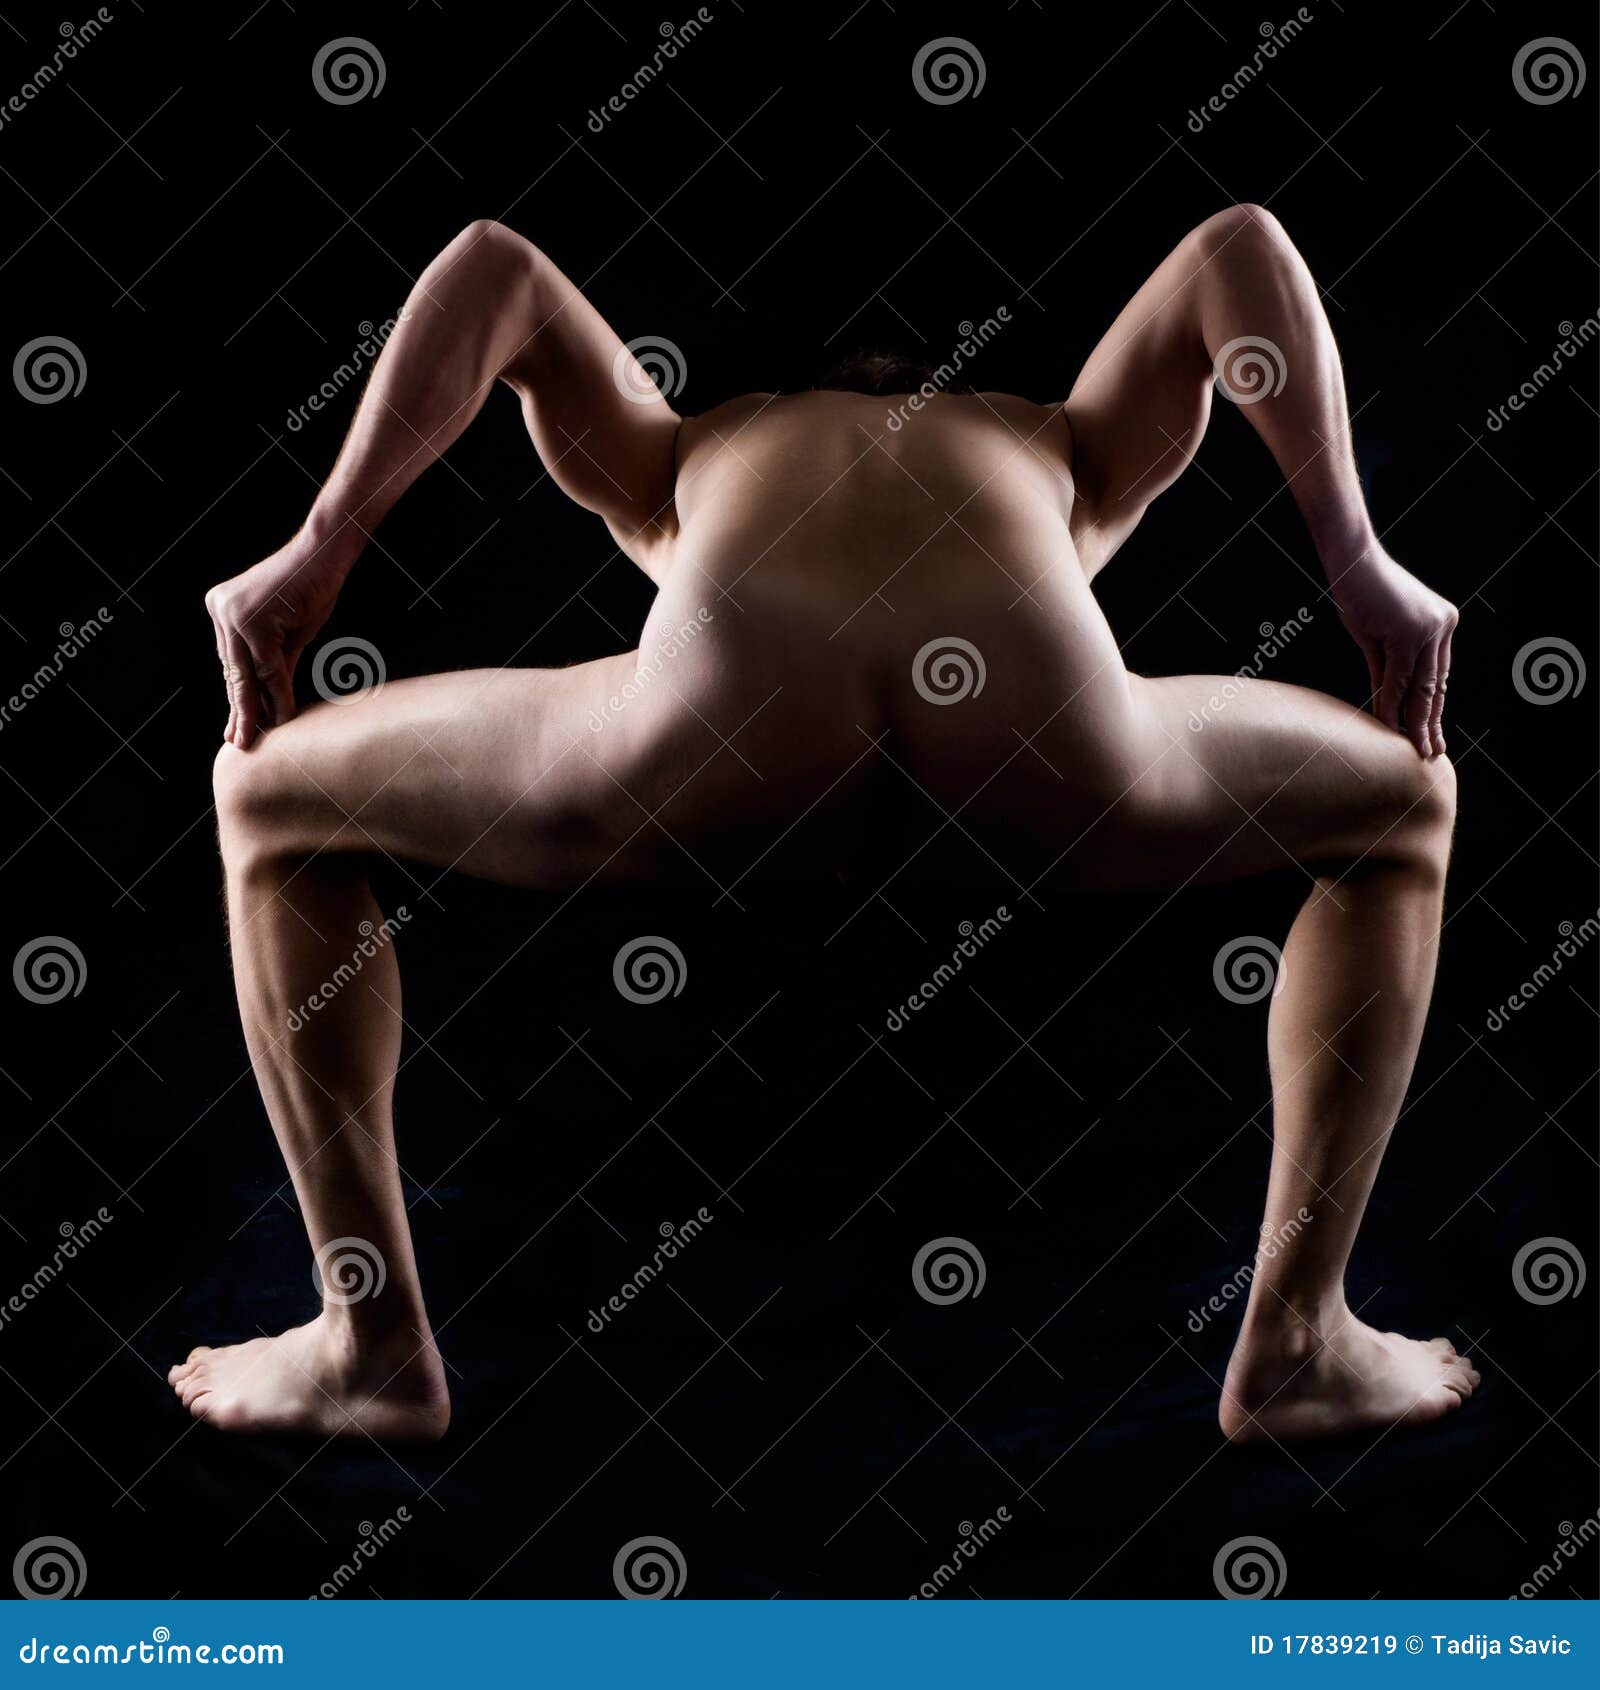 Naked Athlete Pics